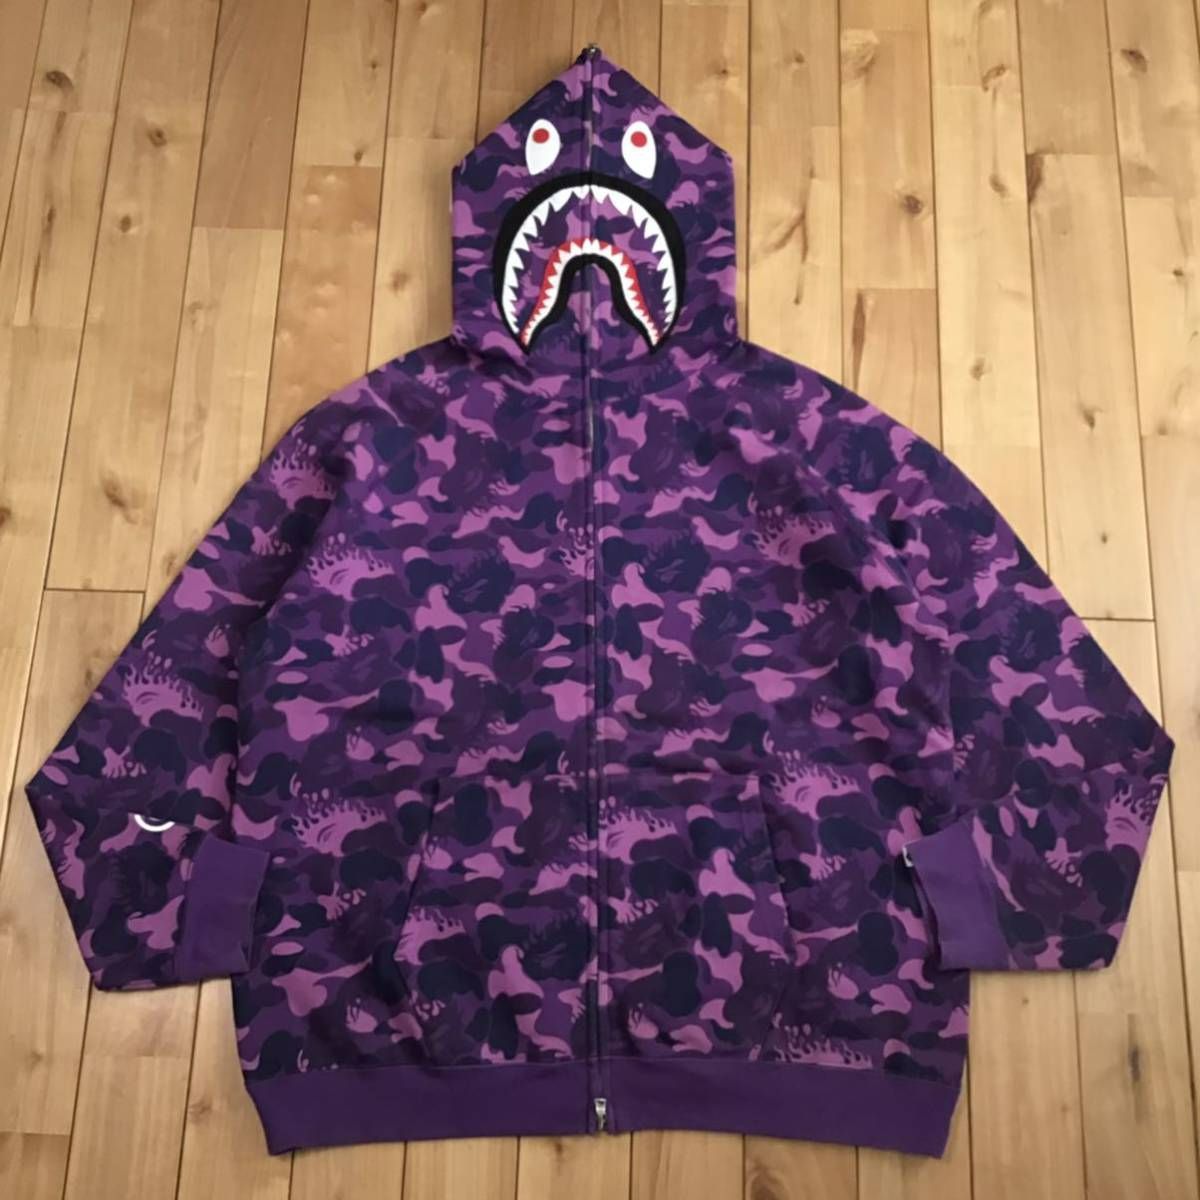 ★XL★ ムック限定 Fire camo シャーク パーカー shark full zip hoodie a bathing ape BAPE  purple camo エイプ ベイプ NIGO 迷彩